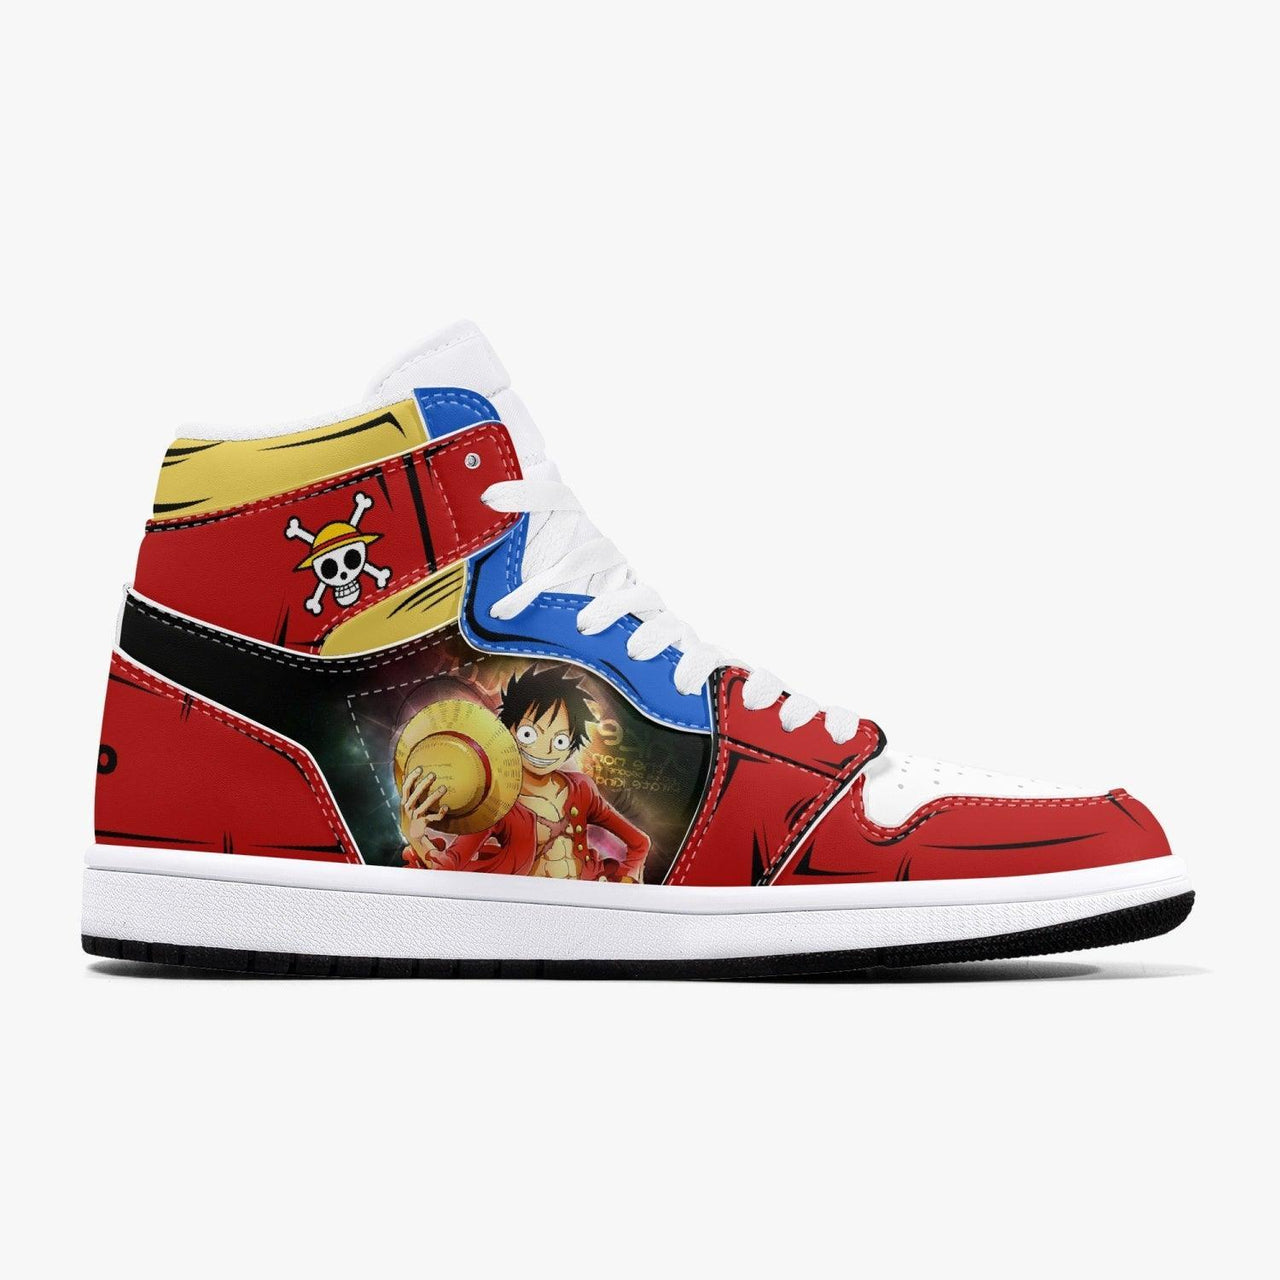 Roronoa Zoro Sneakers Custom Anime One Piece Air Jordan 13 Shoes